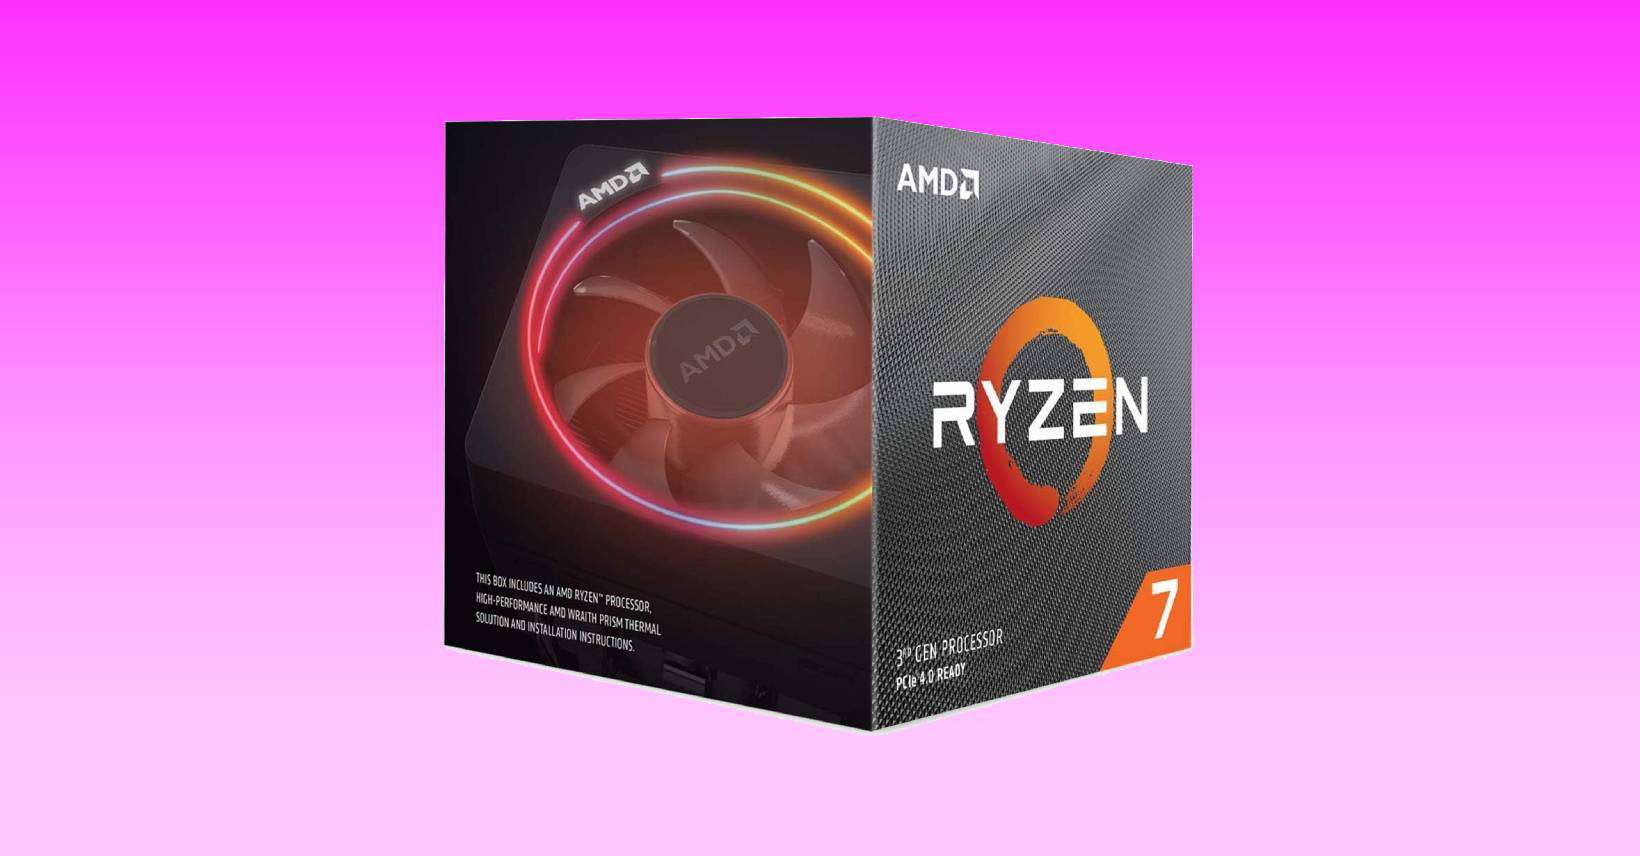 AMD Ryzen 7 3700X sees major price cut in stellar CPU deal